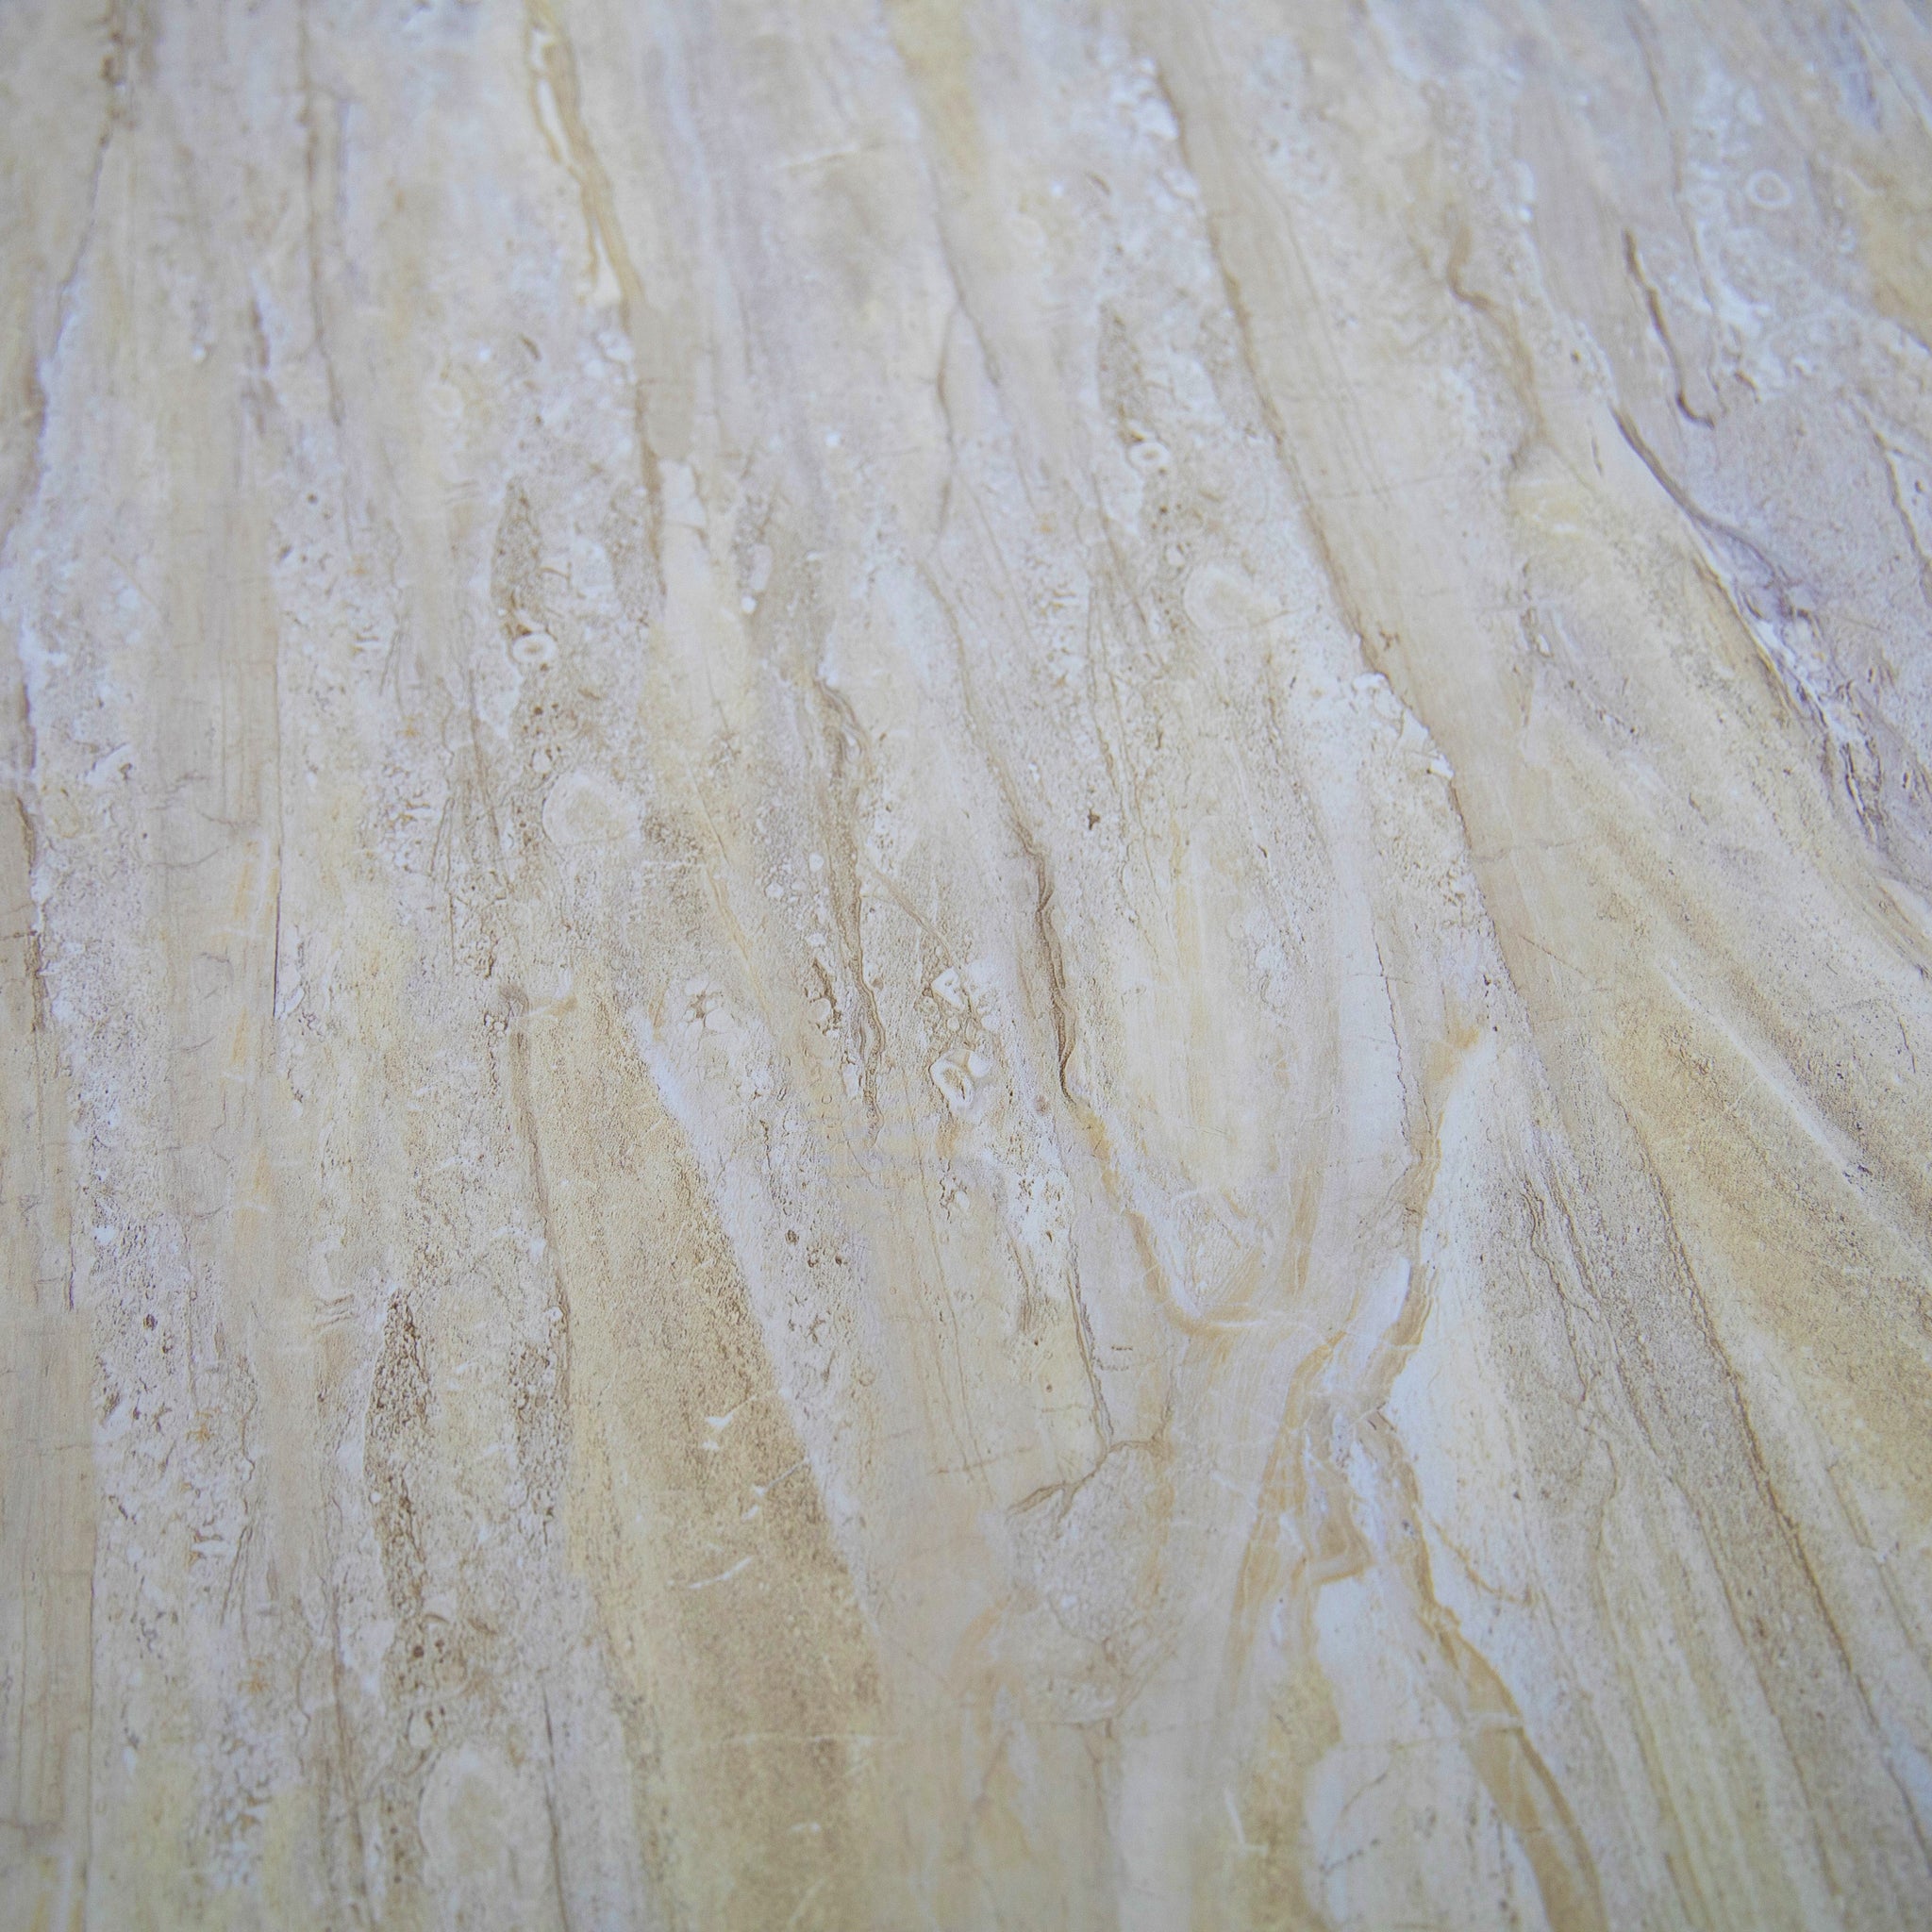 Beige Natural Sandstone Shower Wall Panels PVC 10mm Thick Cladding 2.4m x 1m - CladdTech